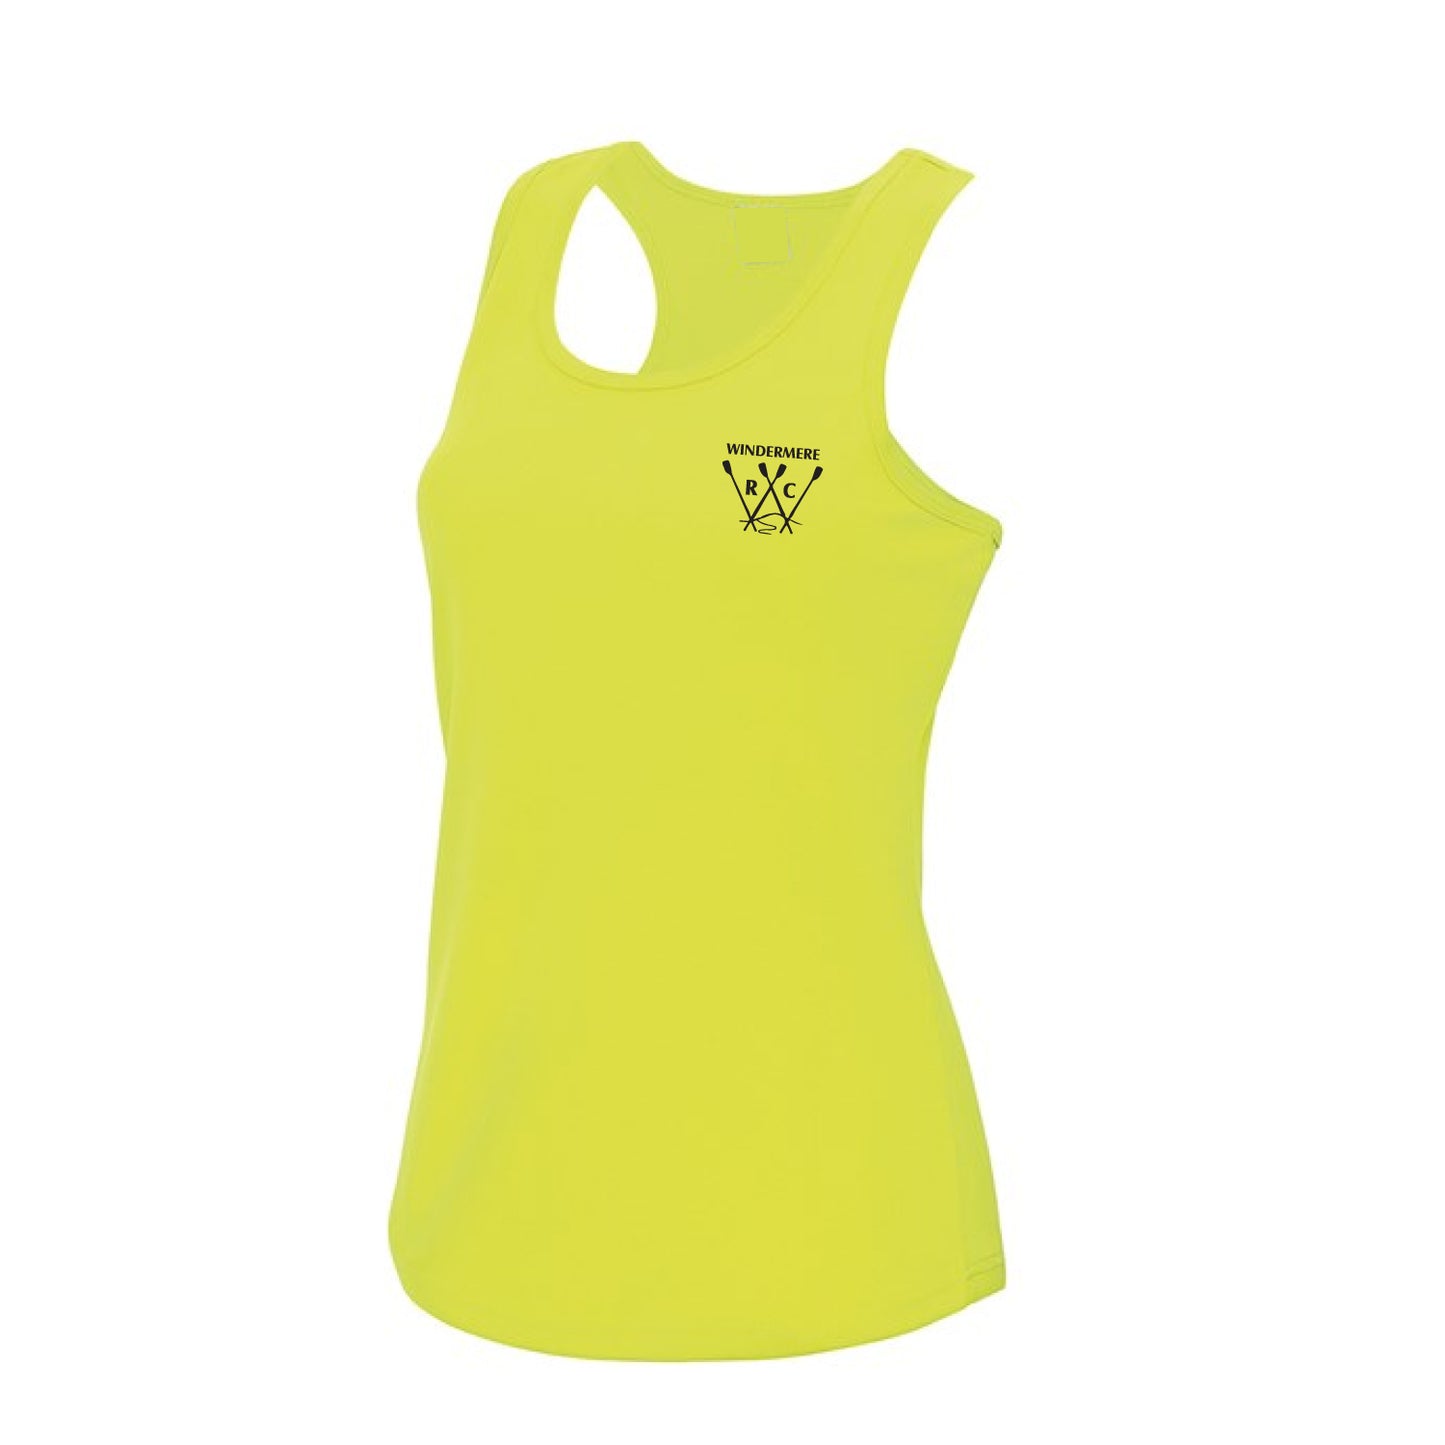 Windermere RC Fluorescent Yellow Vest